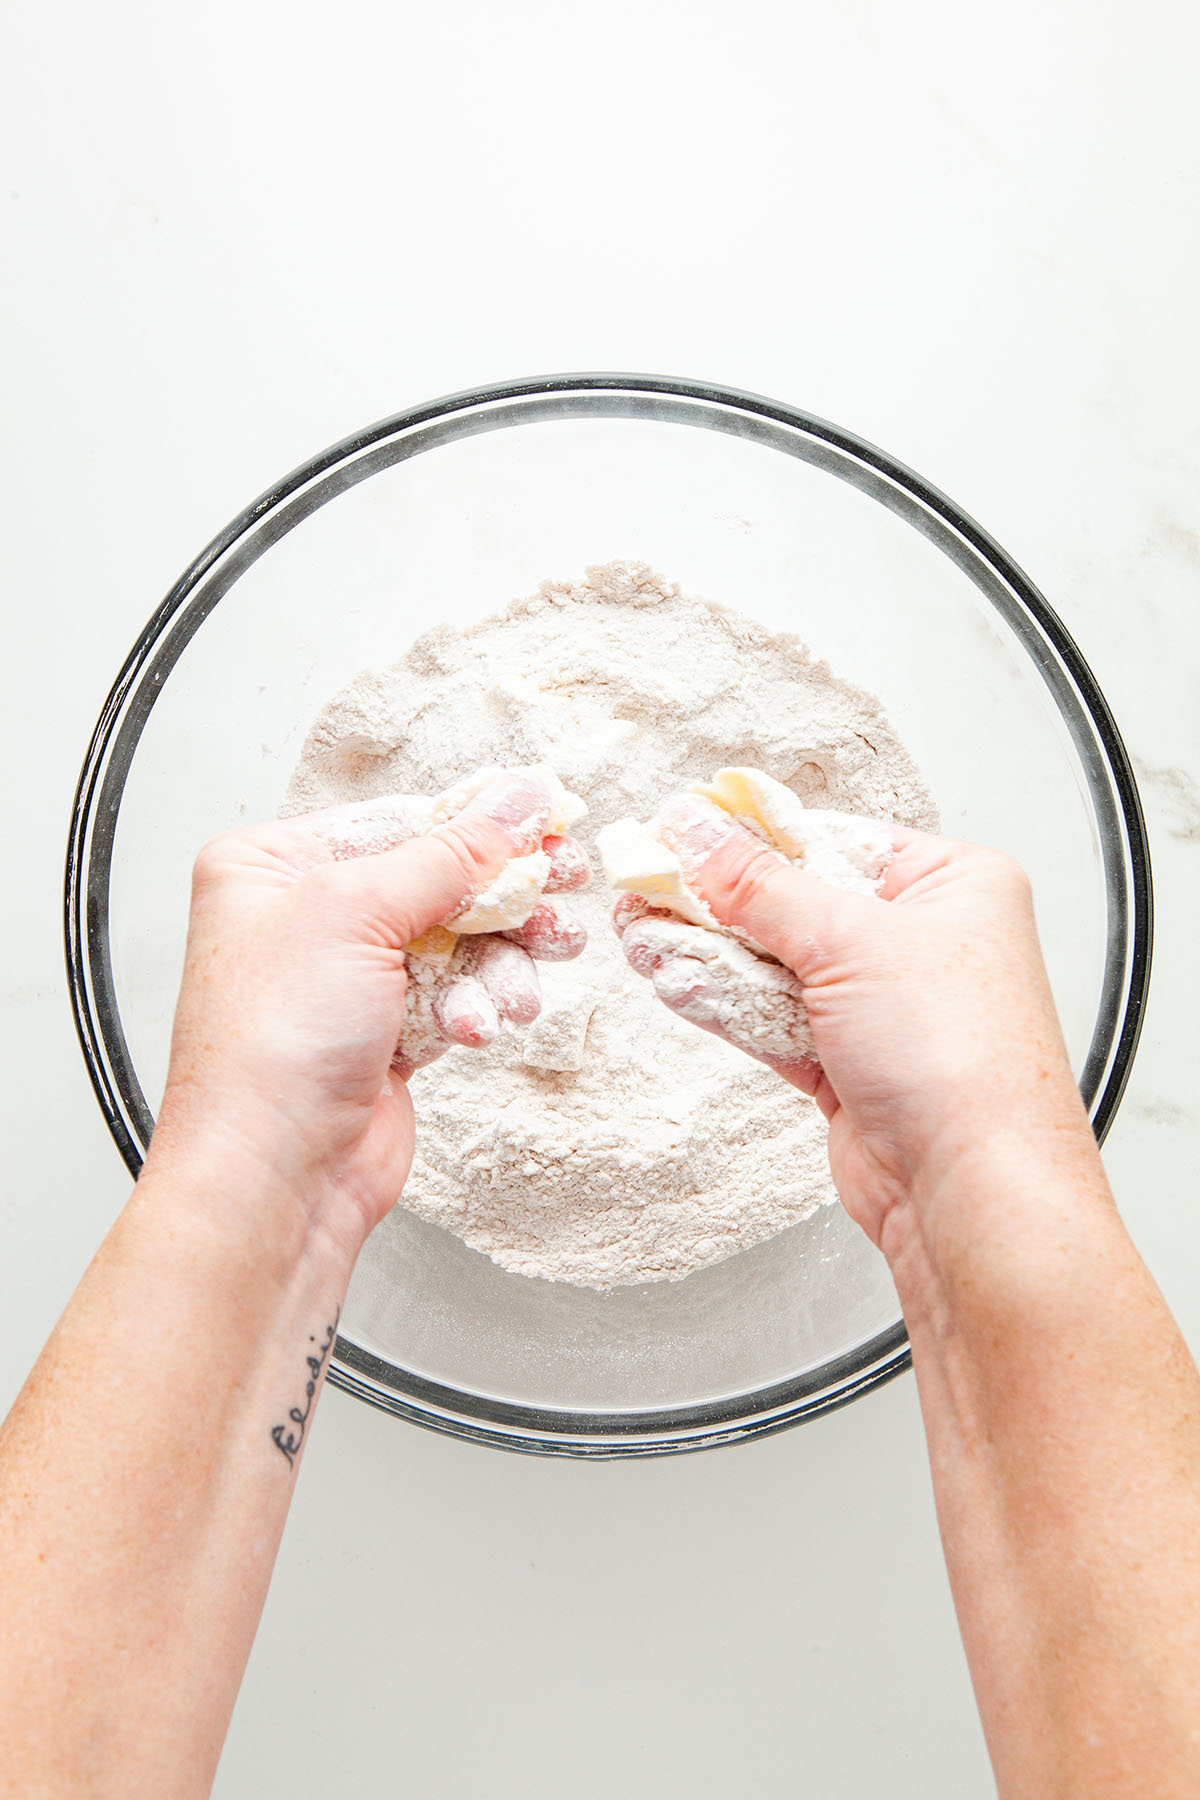 Hands rubbing butter into flour.